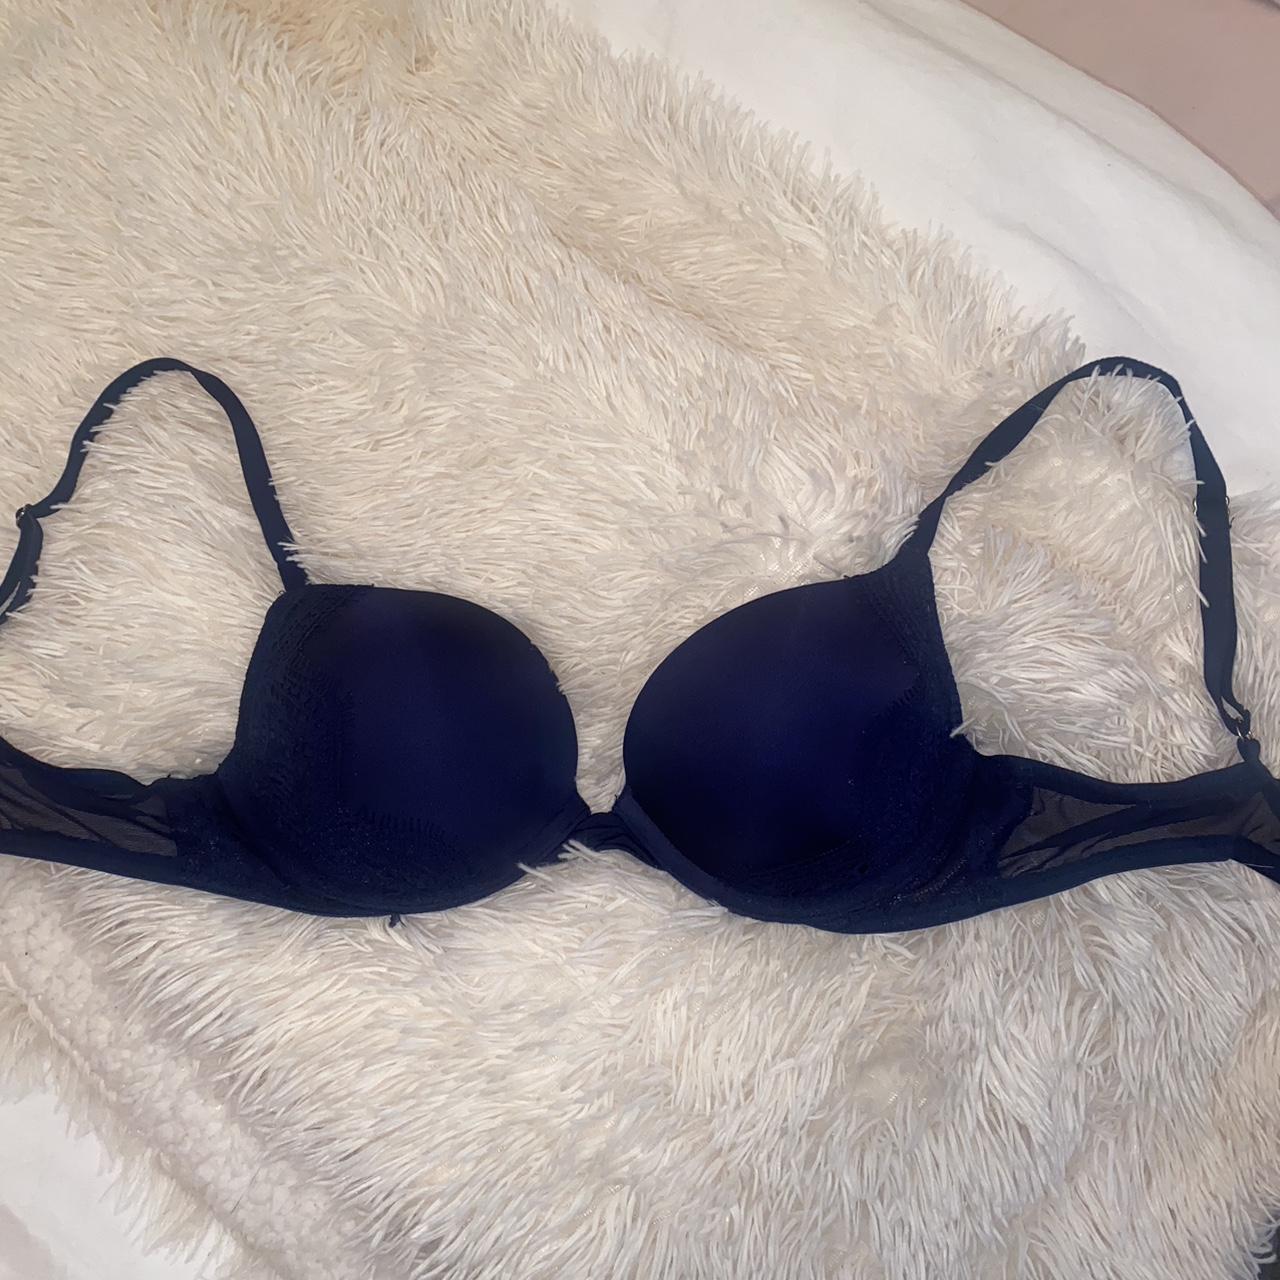 Lacy, black and nude Victoria's Secret bra, front - Depop